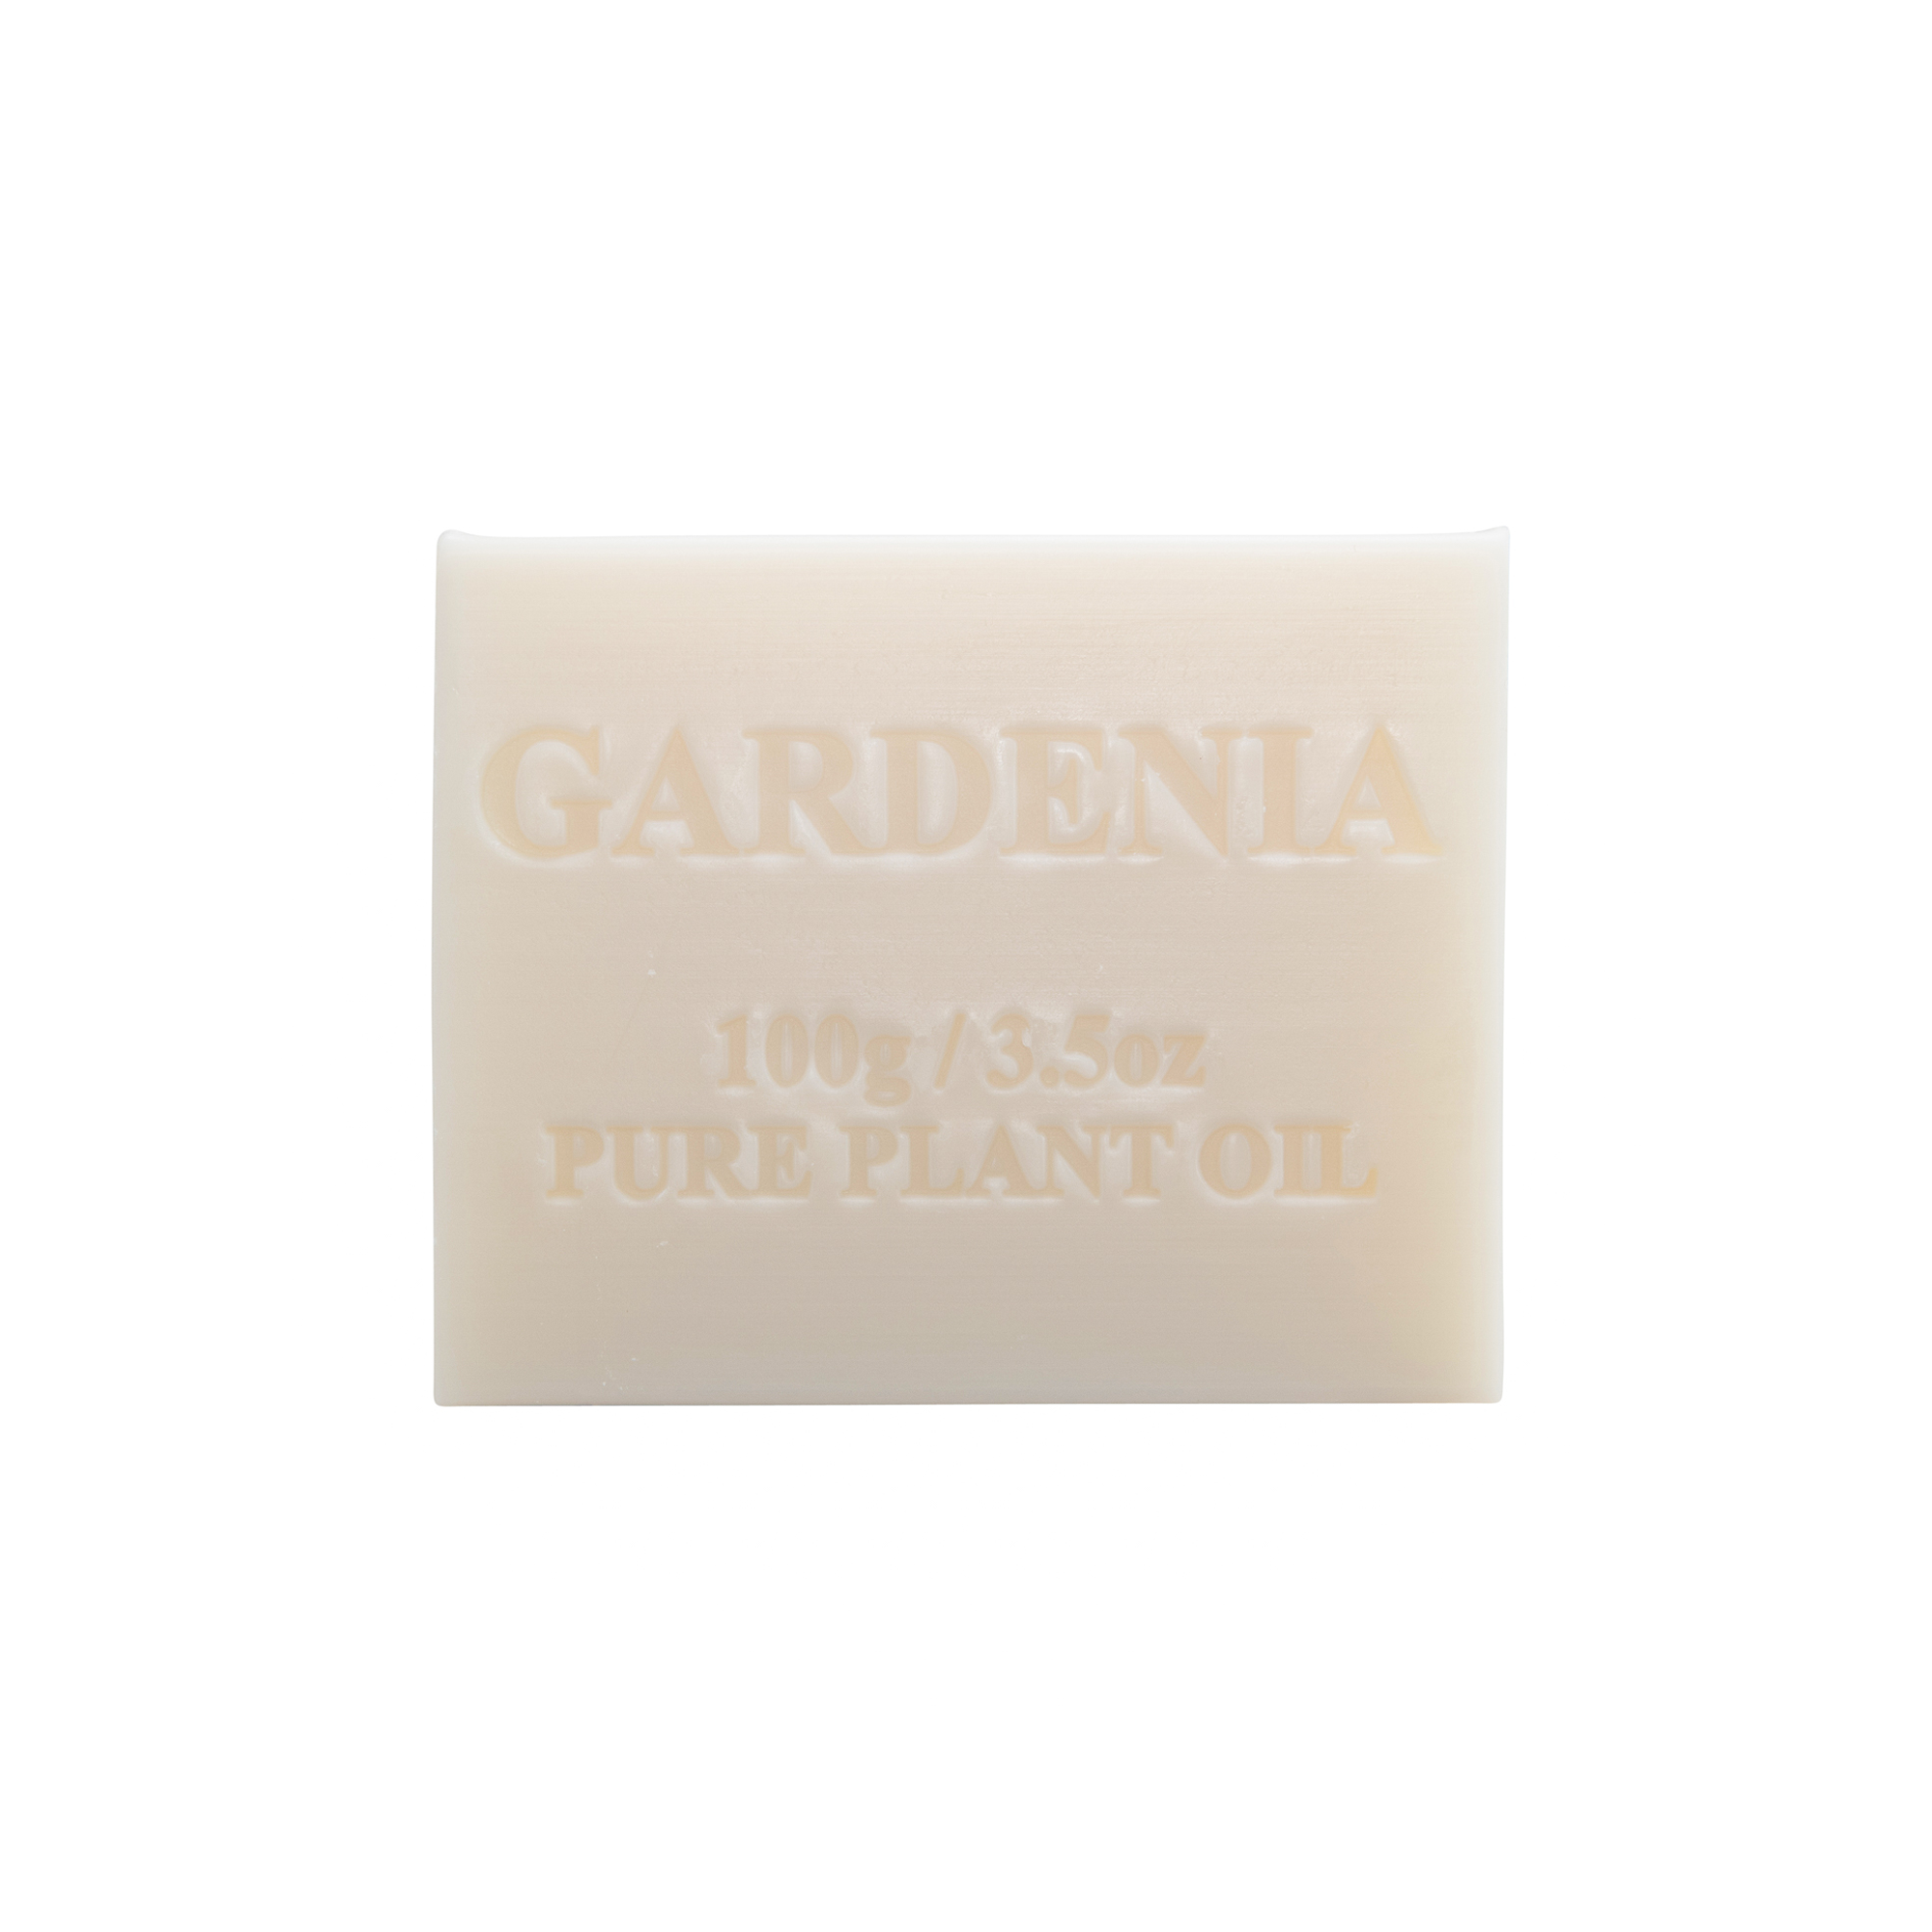 Gardenia 100g